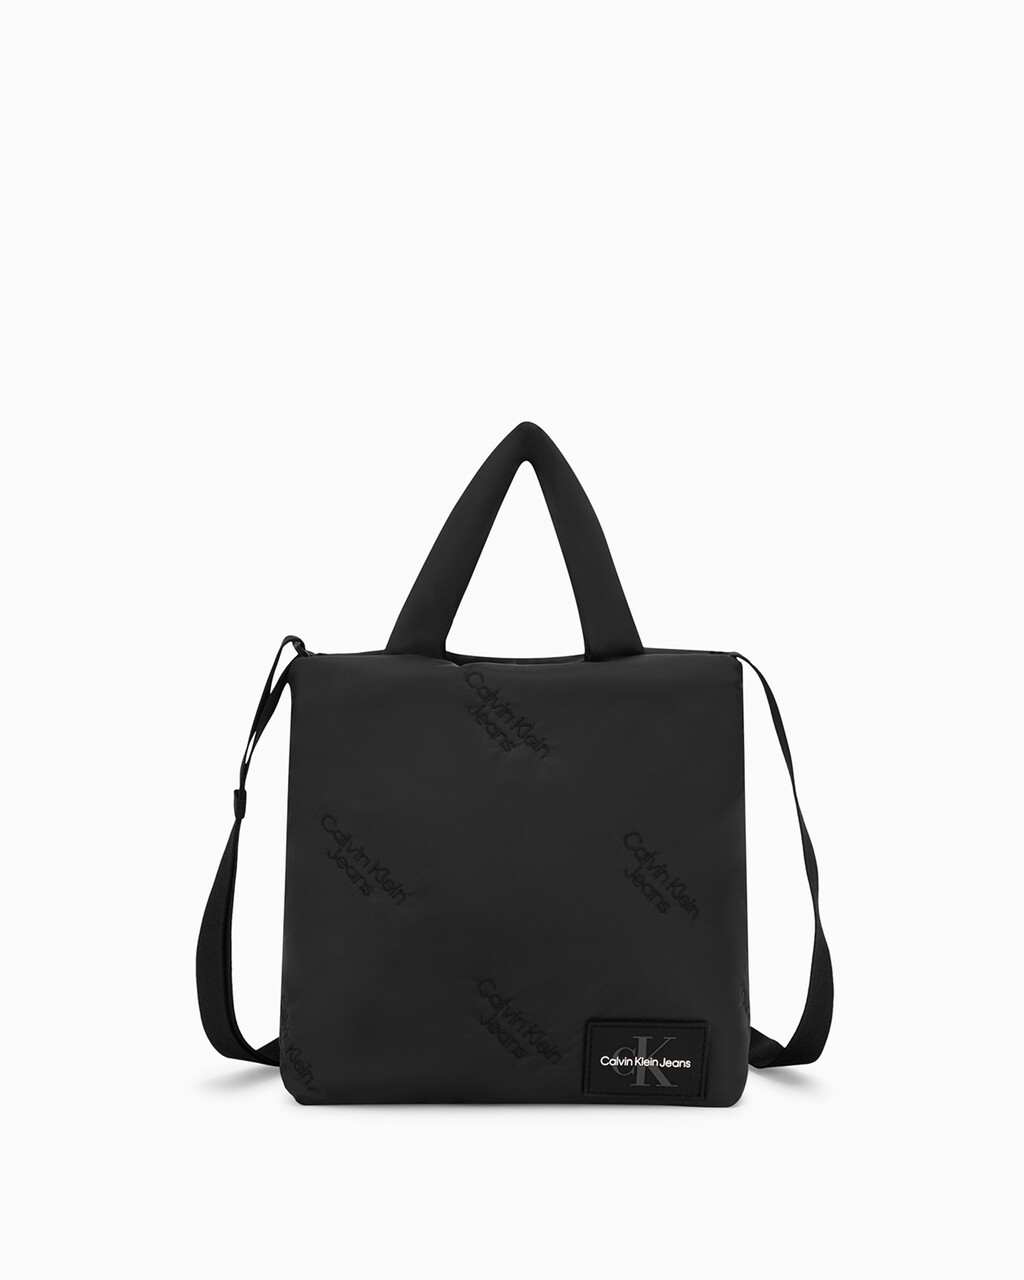 Small Padded Crossbody Bag, BLACK, hi-res